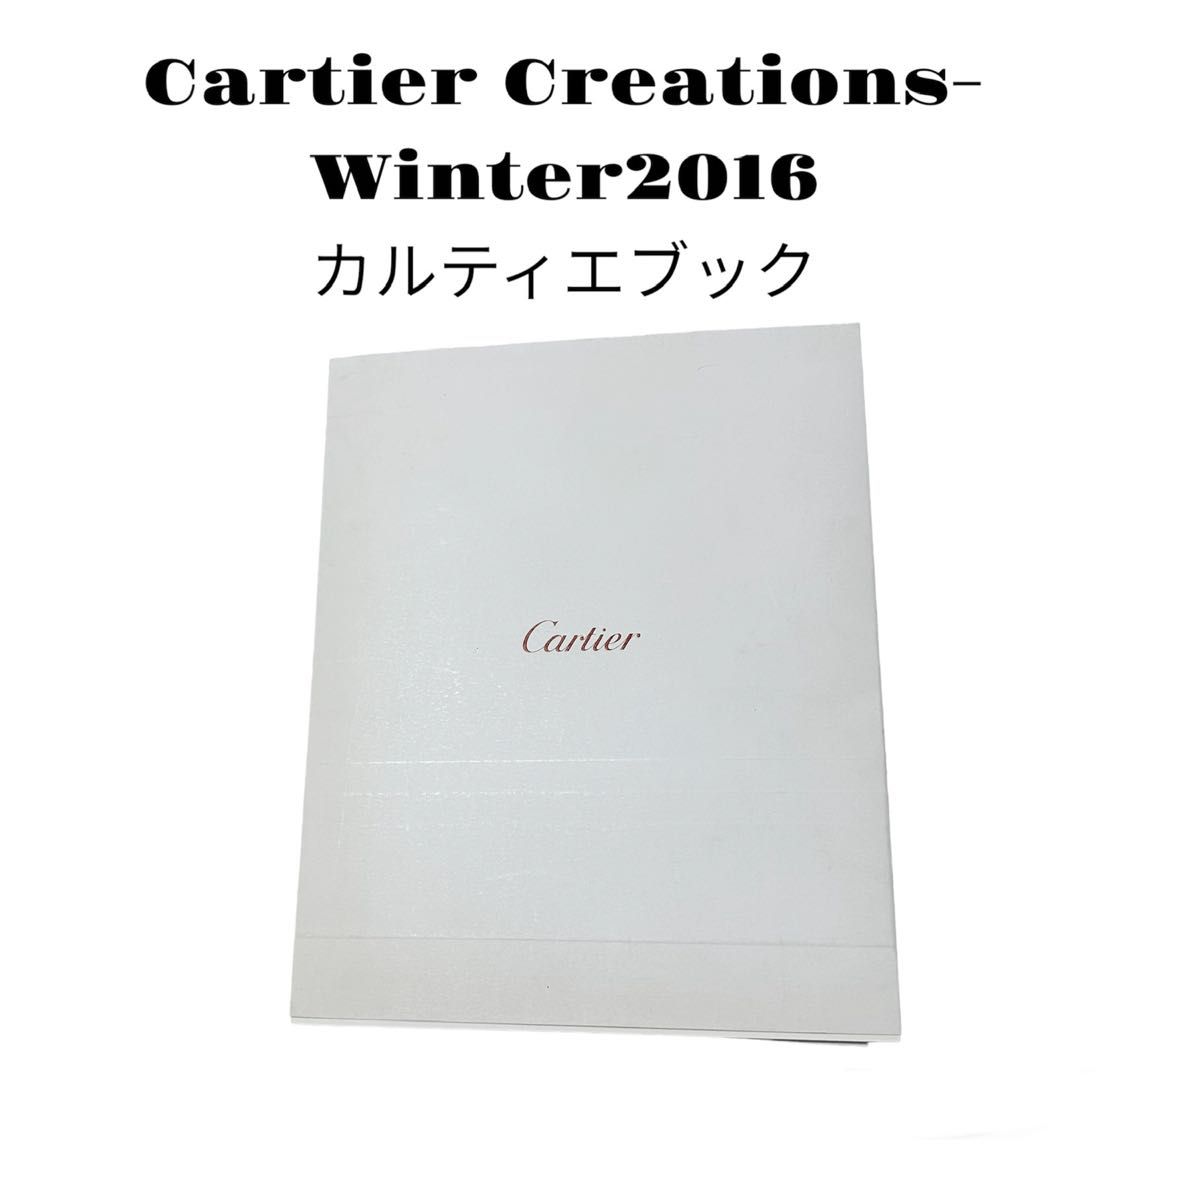 Cartierカルティエ2016 Creations WinterブックPrice List付き